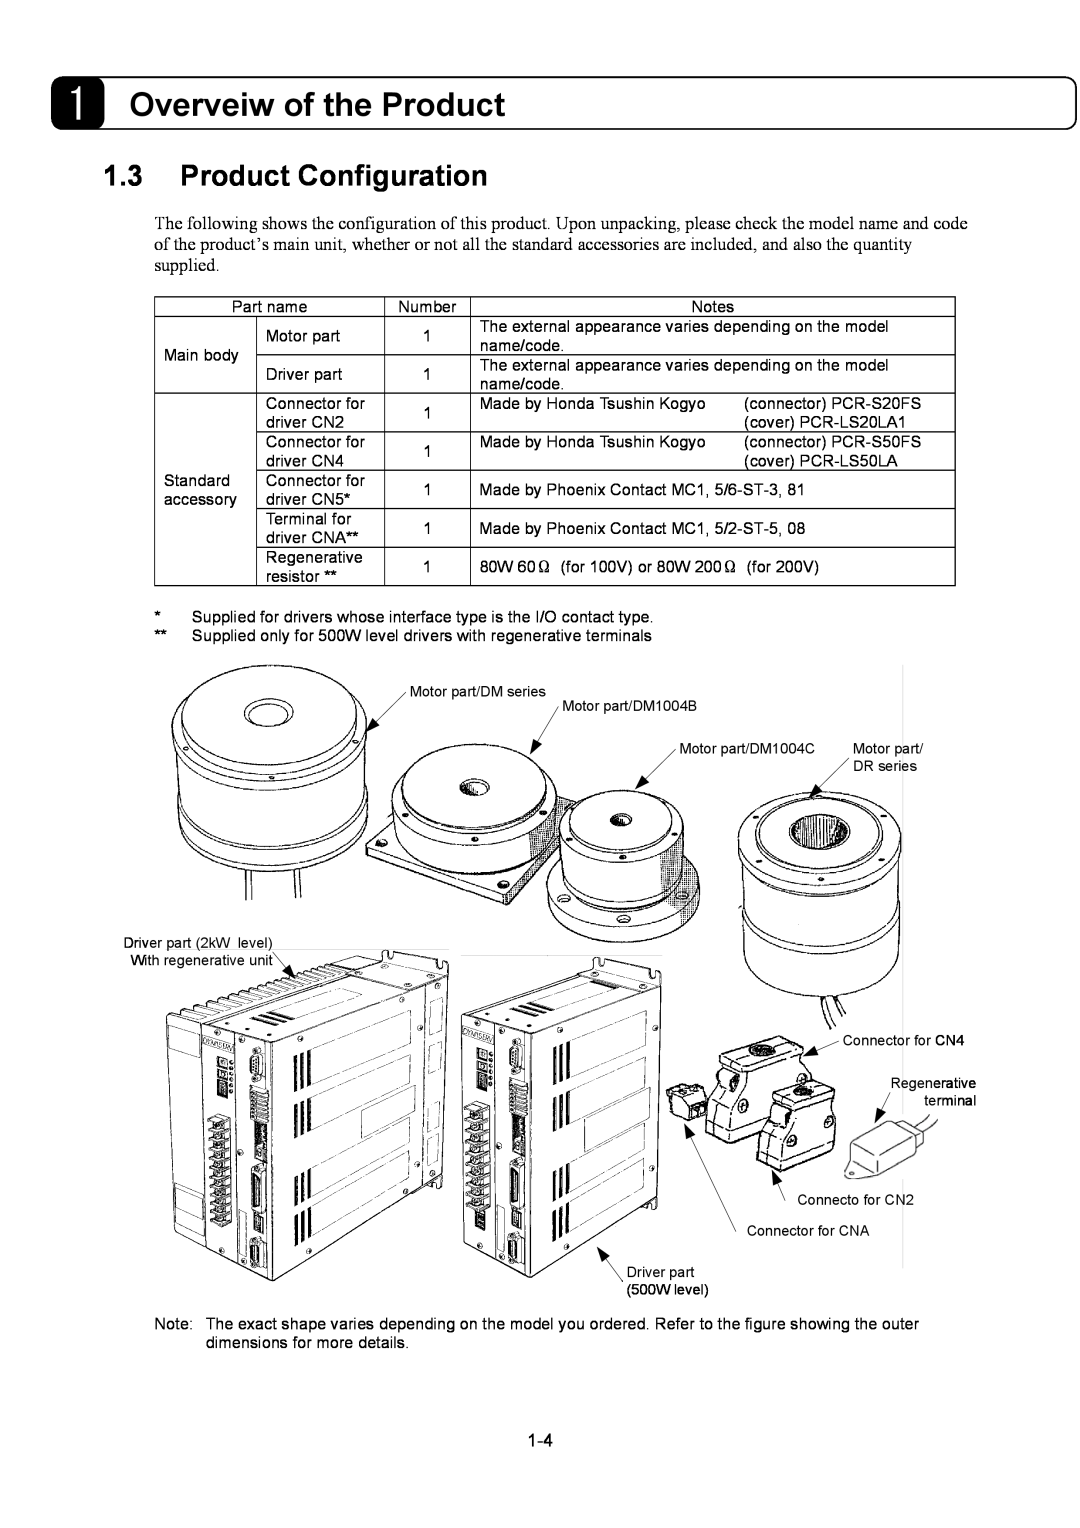 Parker Hannifin G2 Product Configuration, Overveiw of the Product, Motor part/DM series Motor part/DM1004B, DR series 